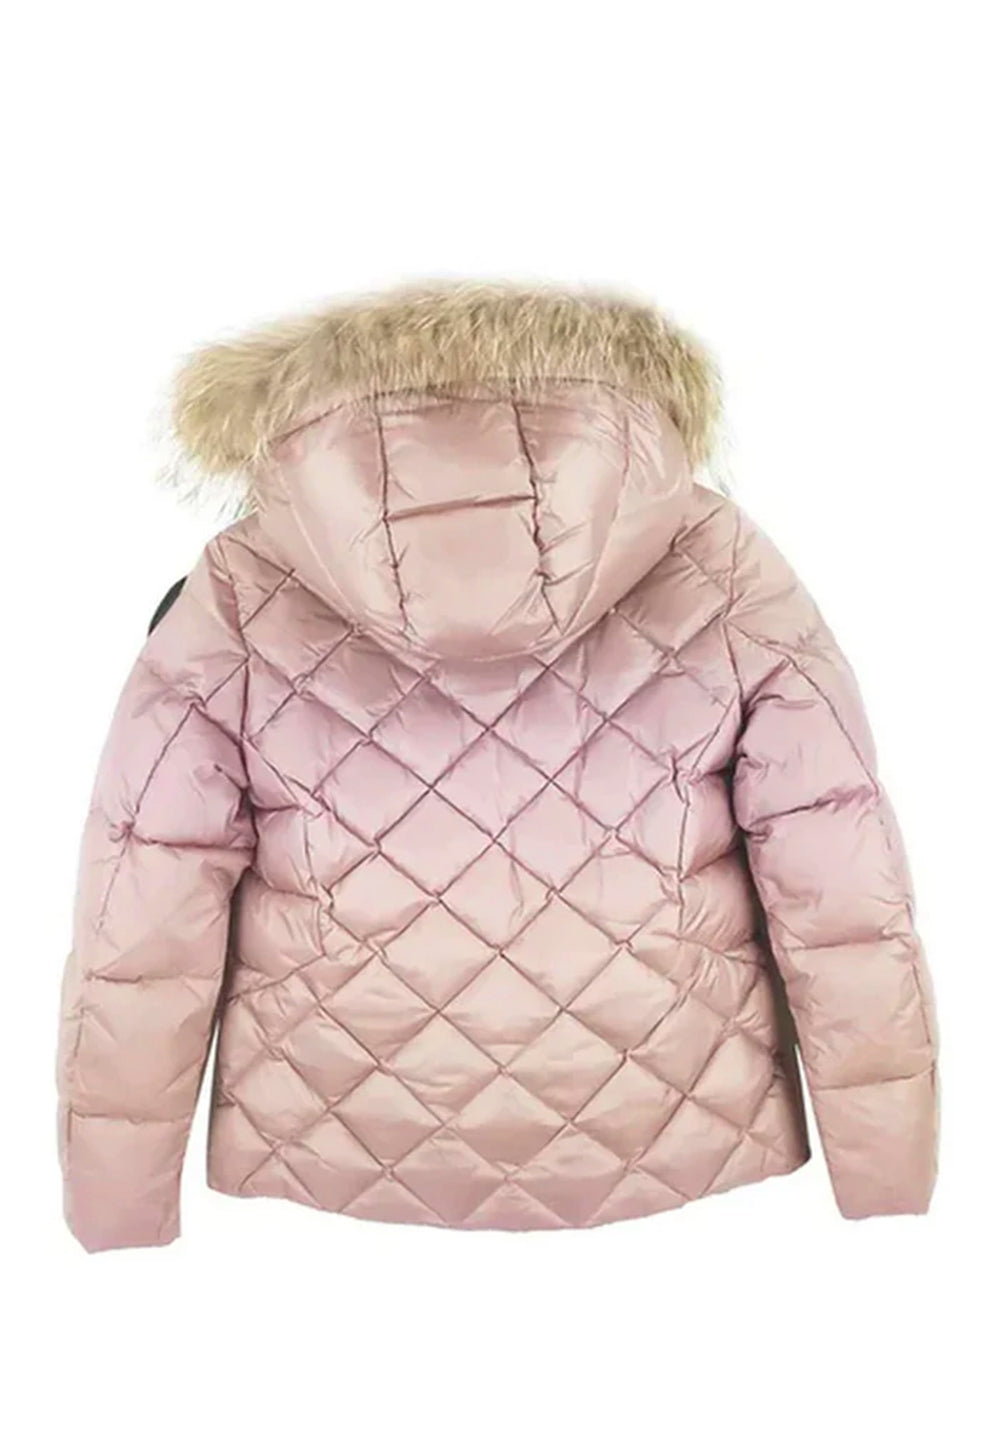 Pink jacket for girls